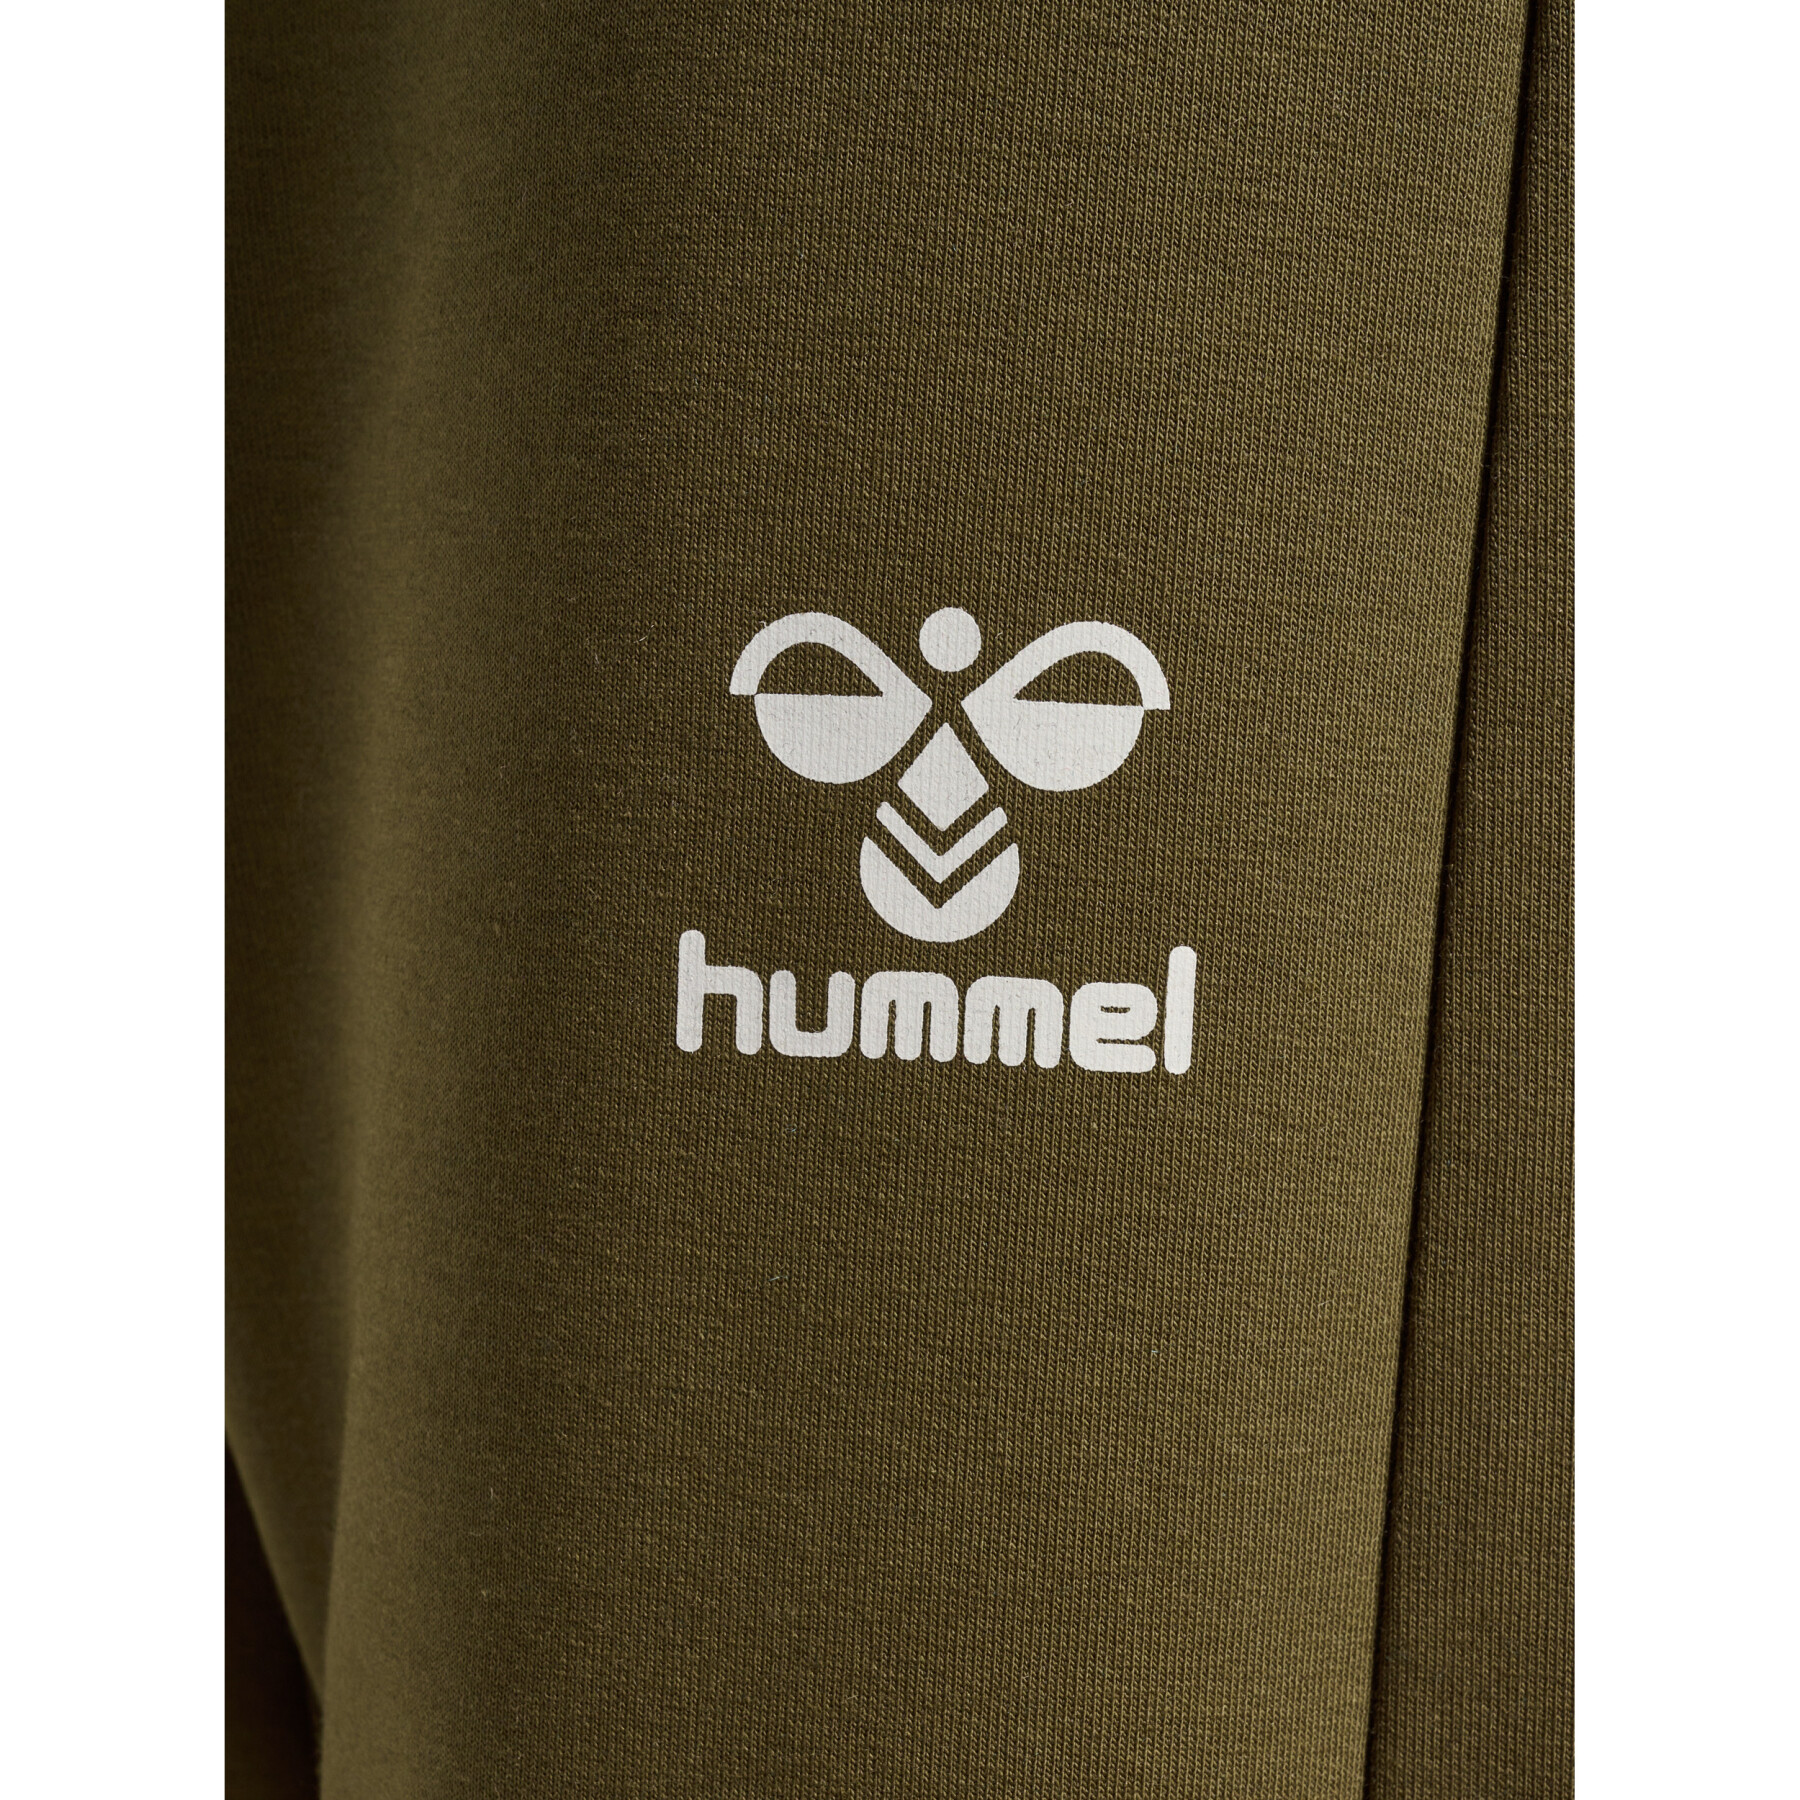 Children's jogging suit Hummel On